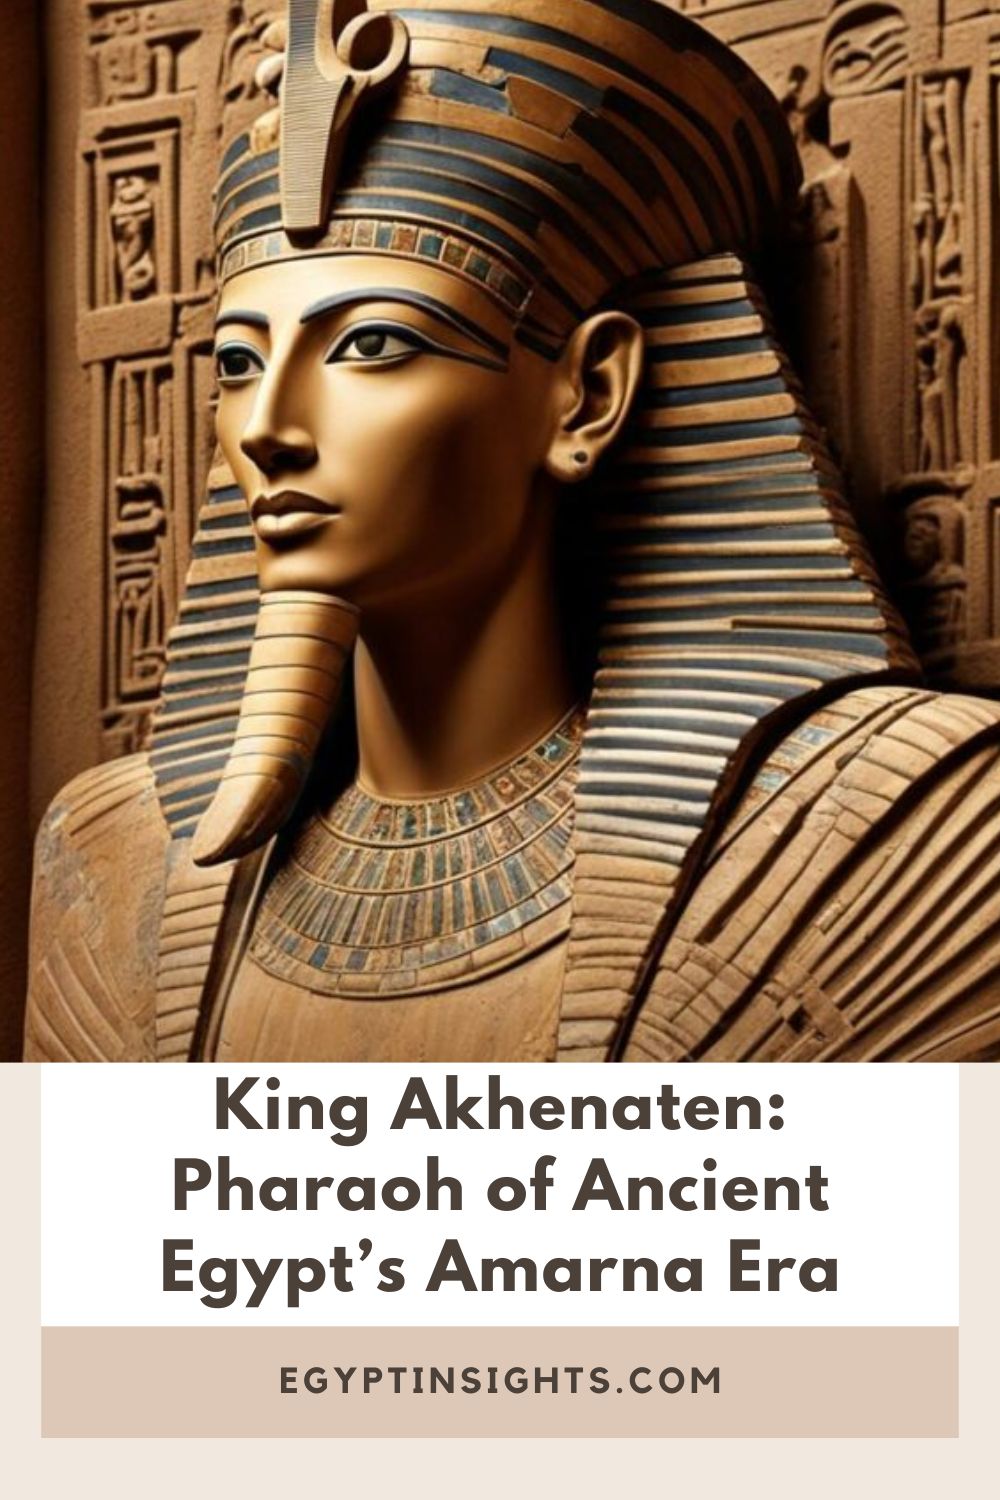 King Akhenaten: Pharaoh of Ancient Egypt's Amarna Era